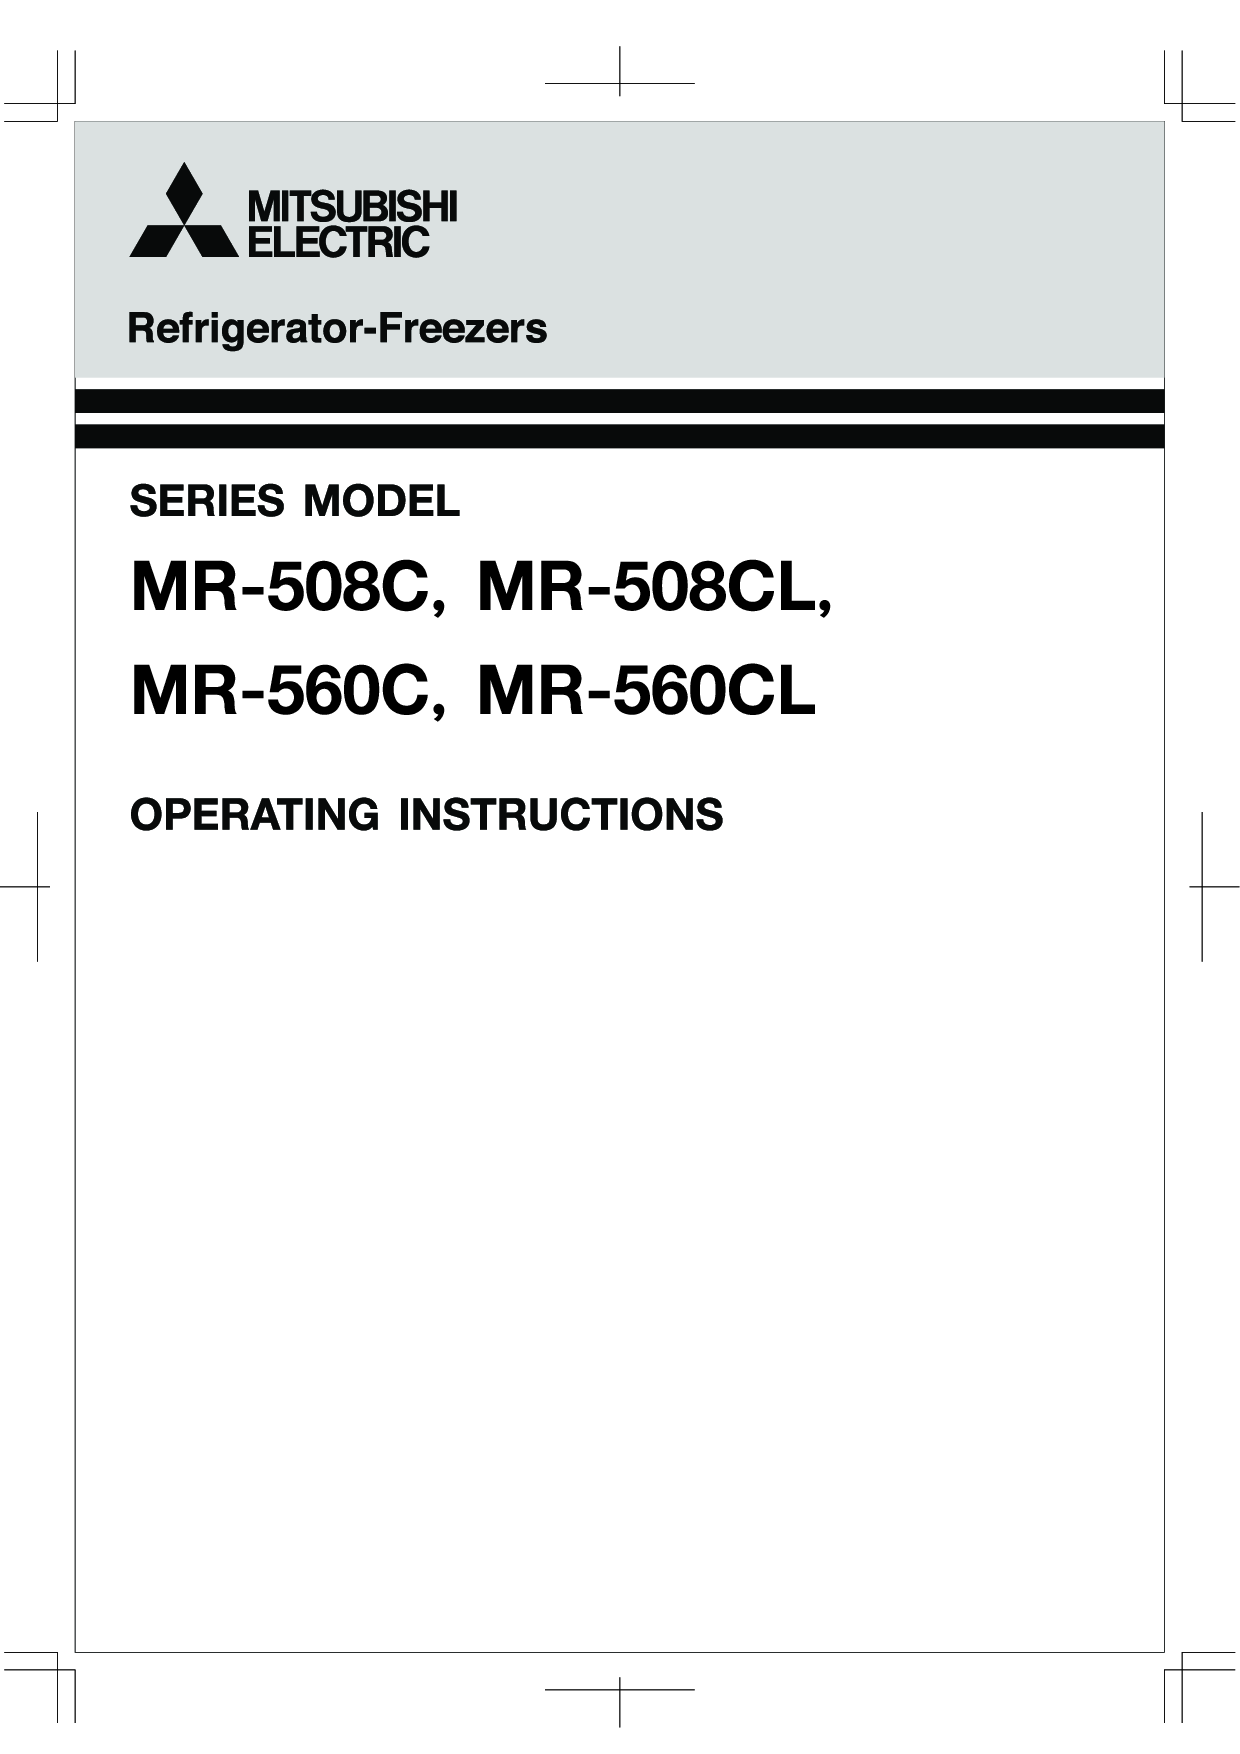 Mitsubishi Electronics MR-560C, MR-560CL, MR-508CL, MR-508C User Manual